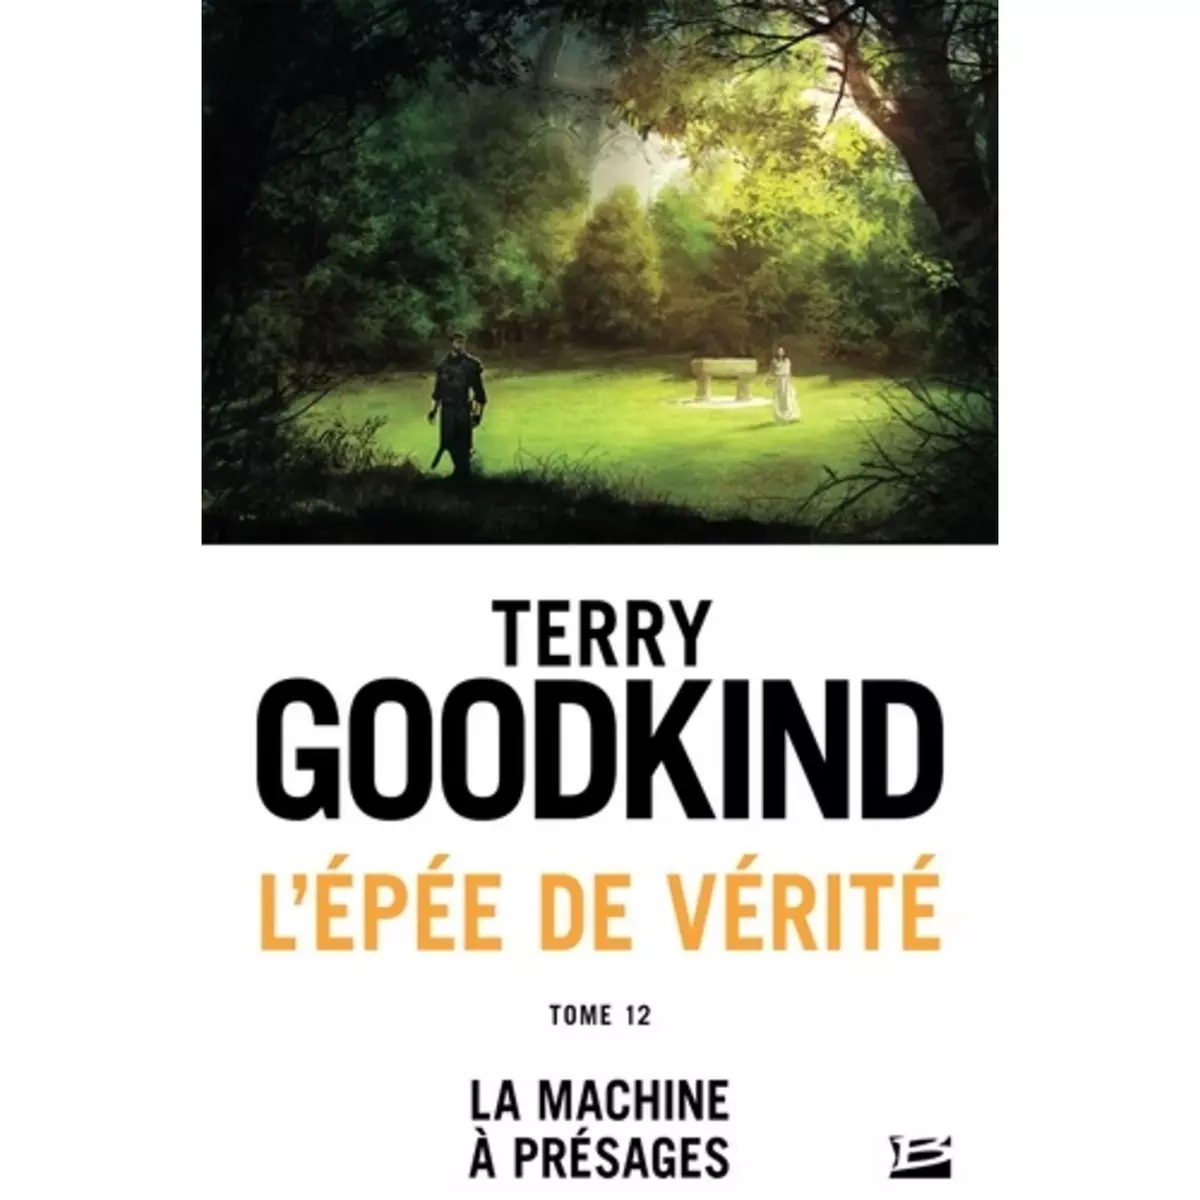  L'EPEE DE VERITE TOME 12 : LA MACHINE A PRESAGES, Goodkind Terry